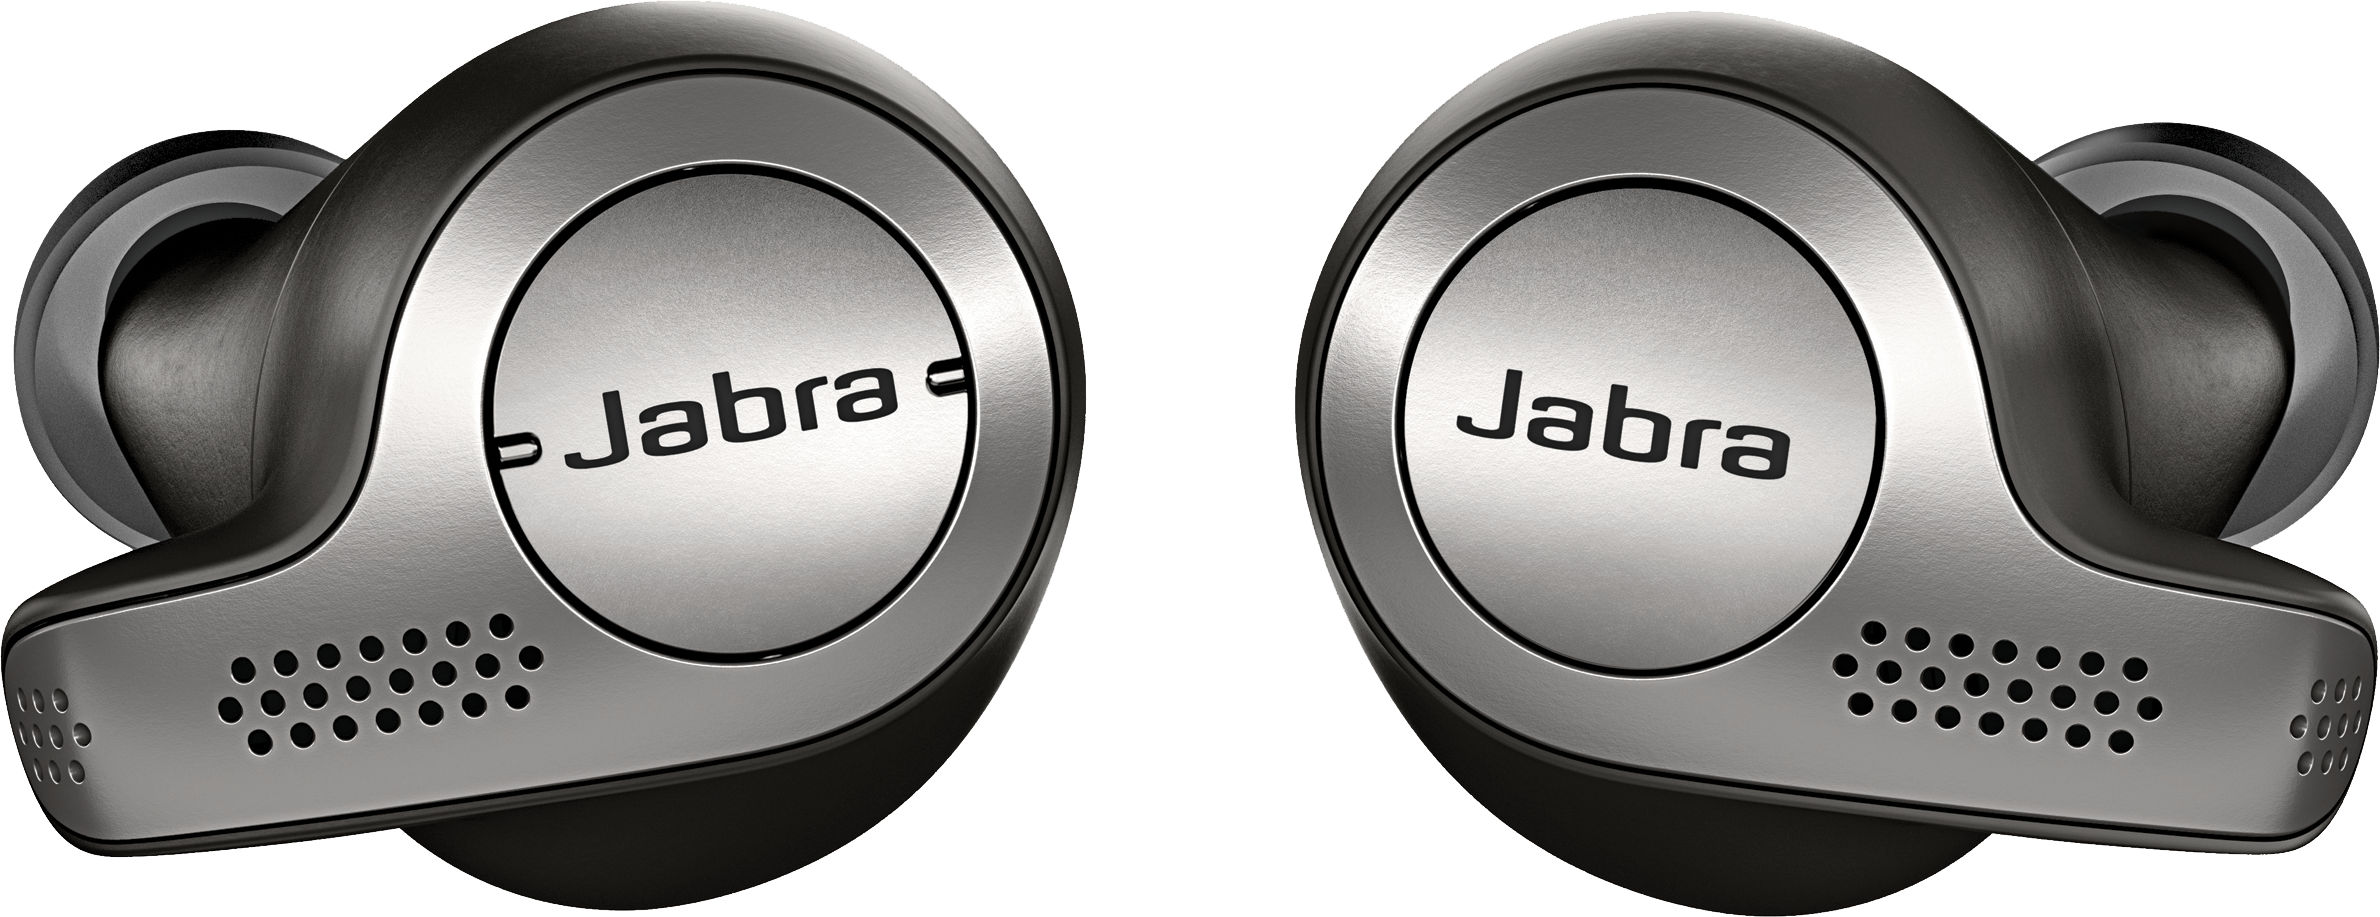 3 reasons to love Jabra Elite 65t Wireless Earbuds